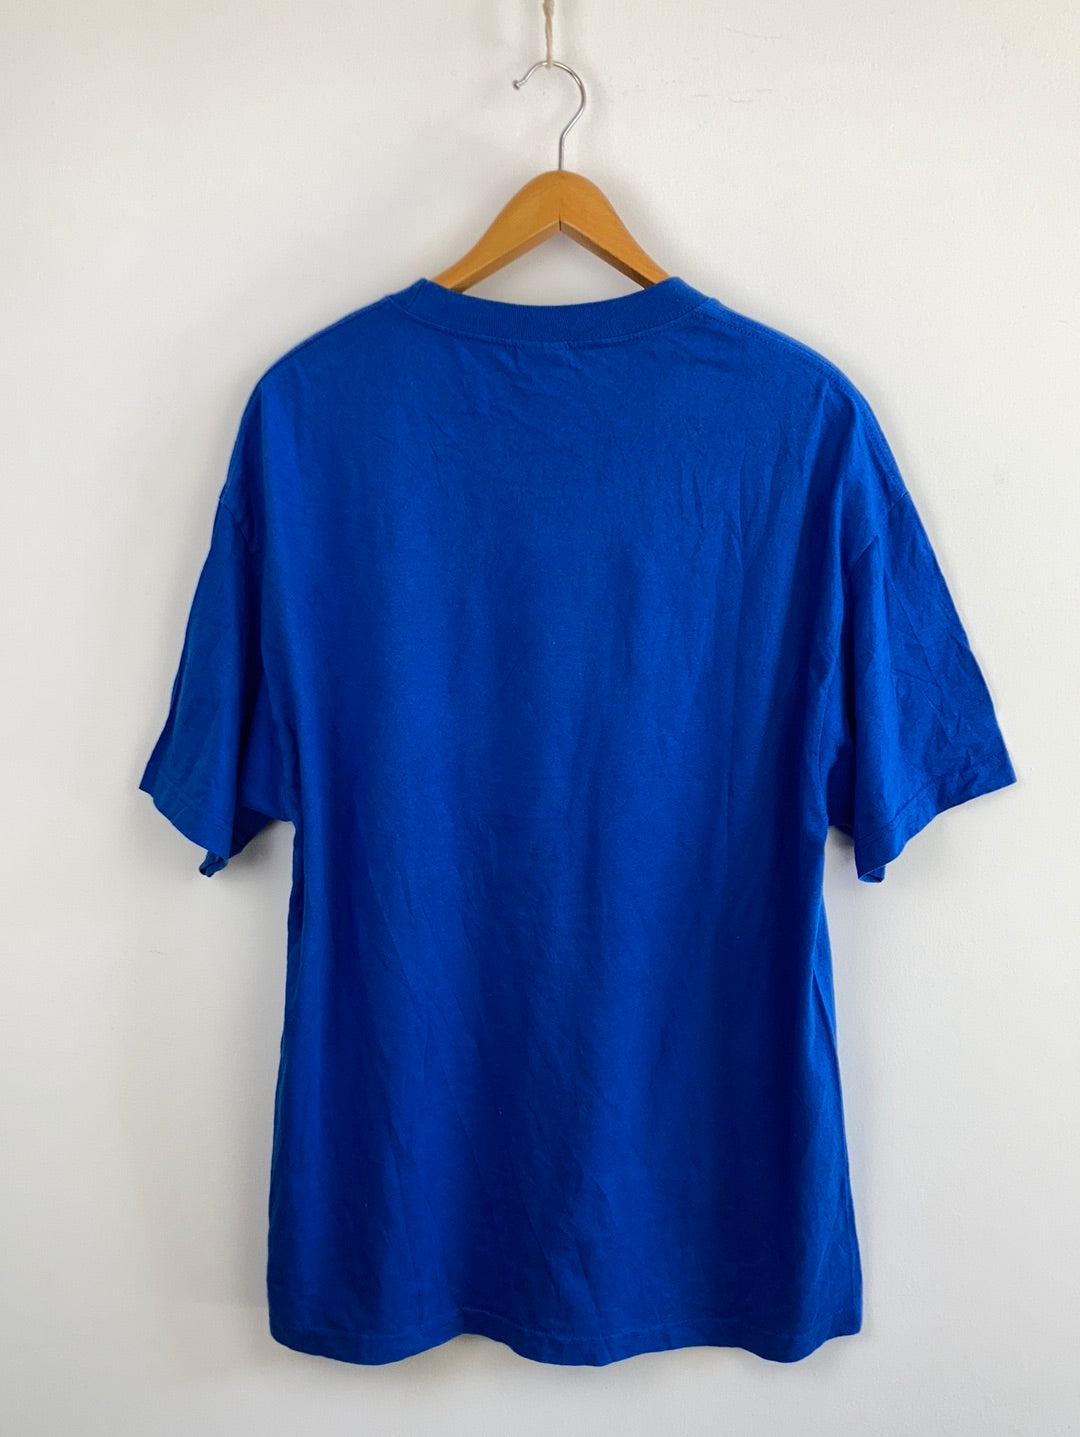 Kellogg’s T-Shirt (XL)